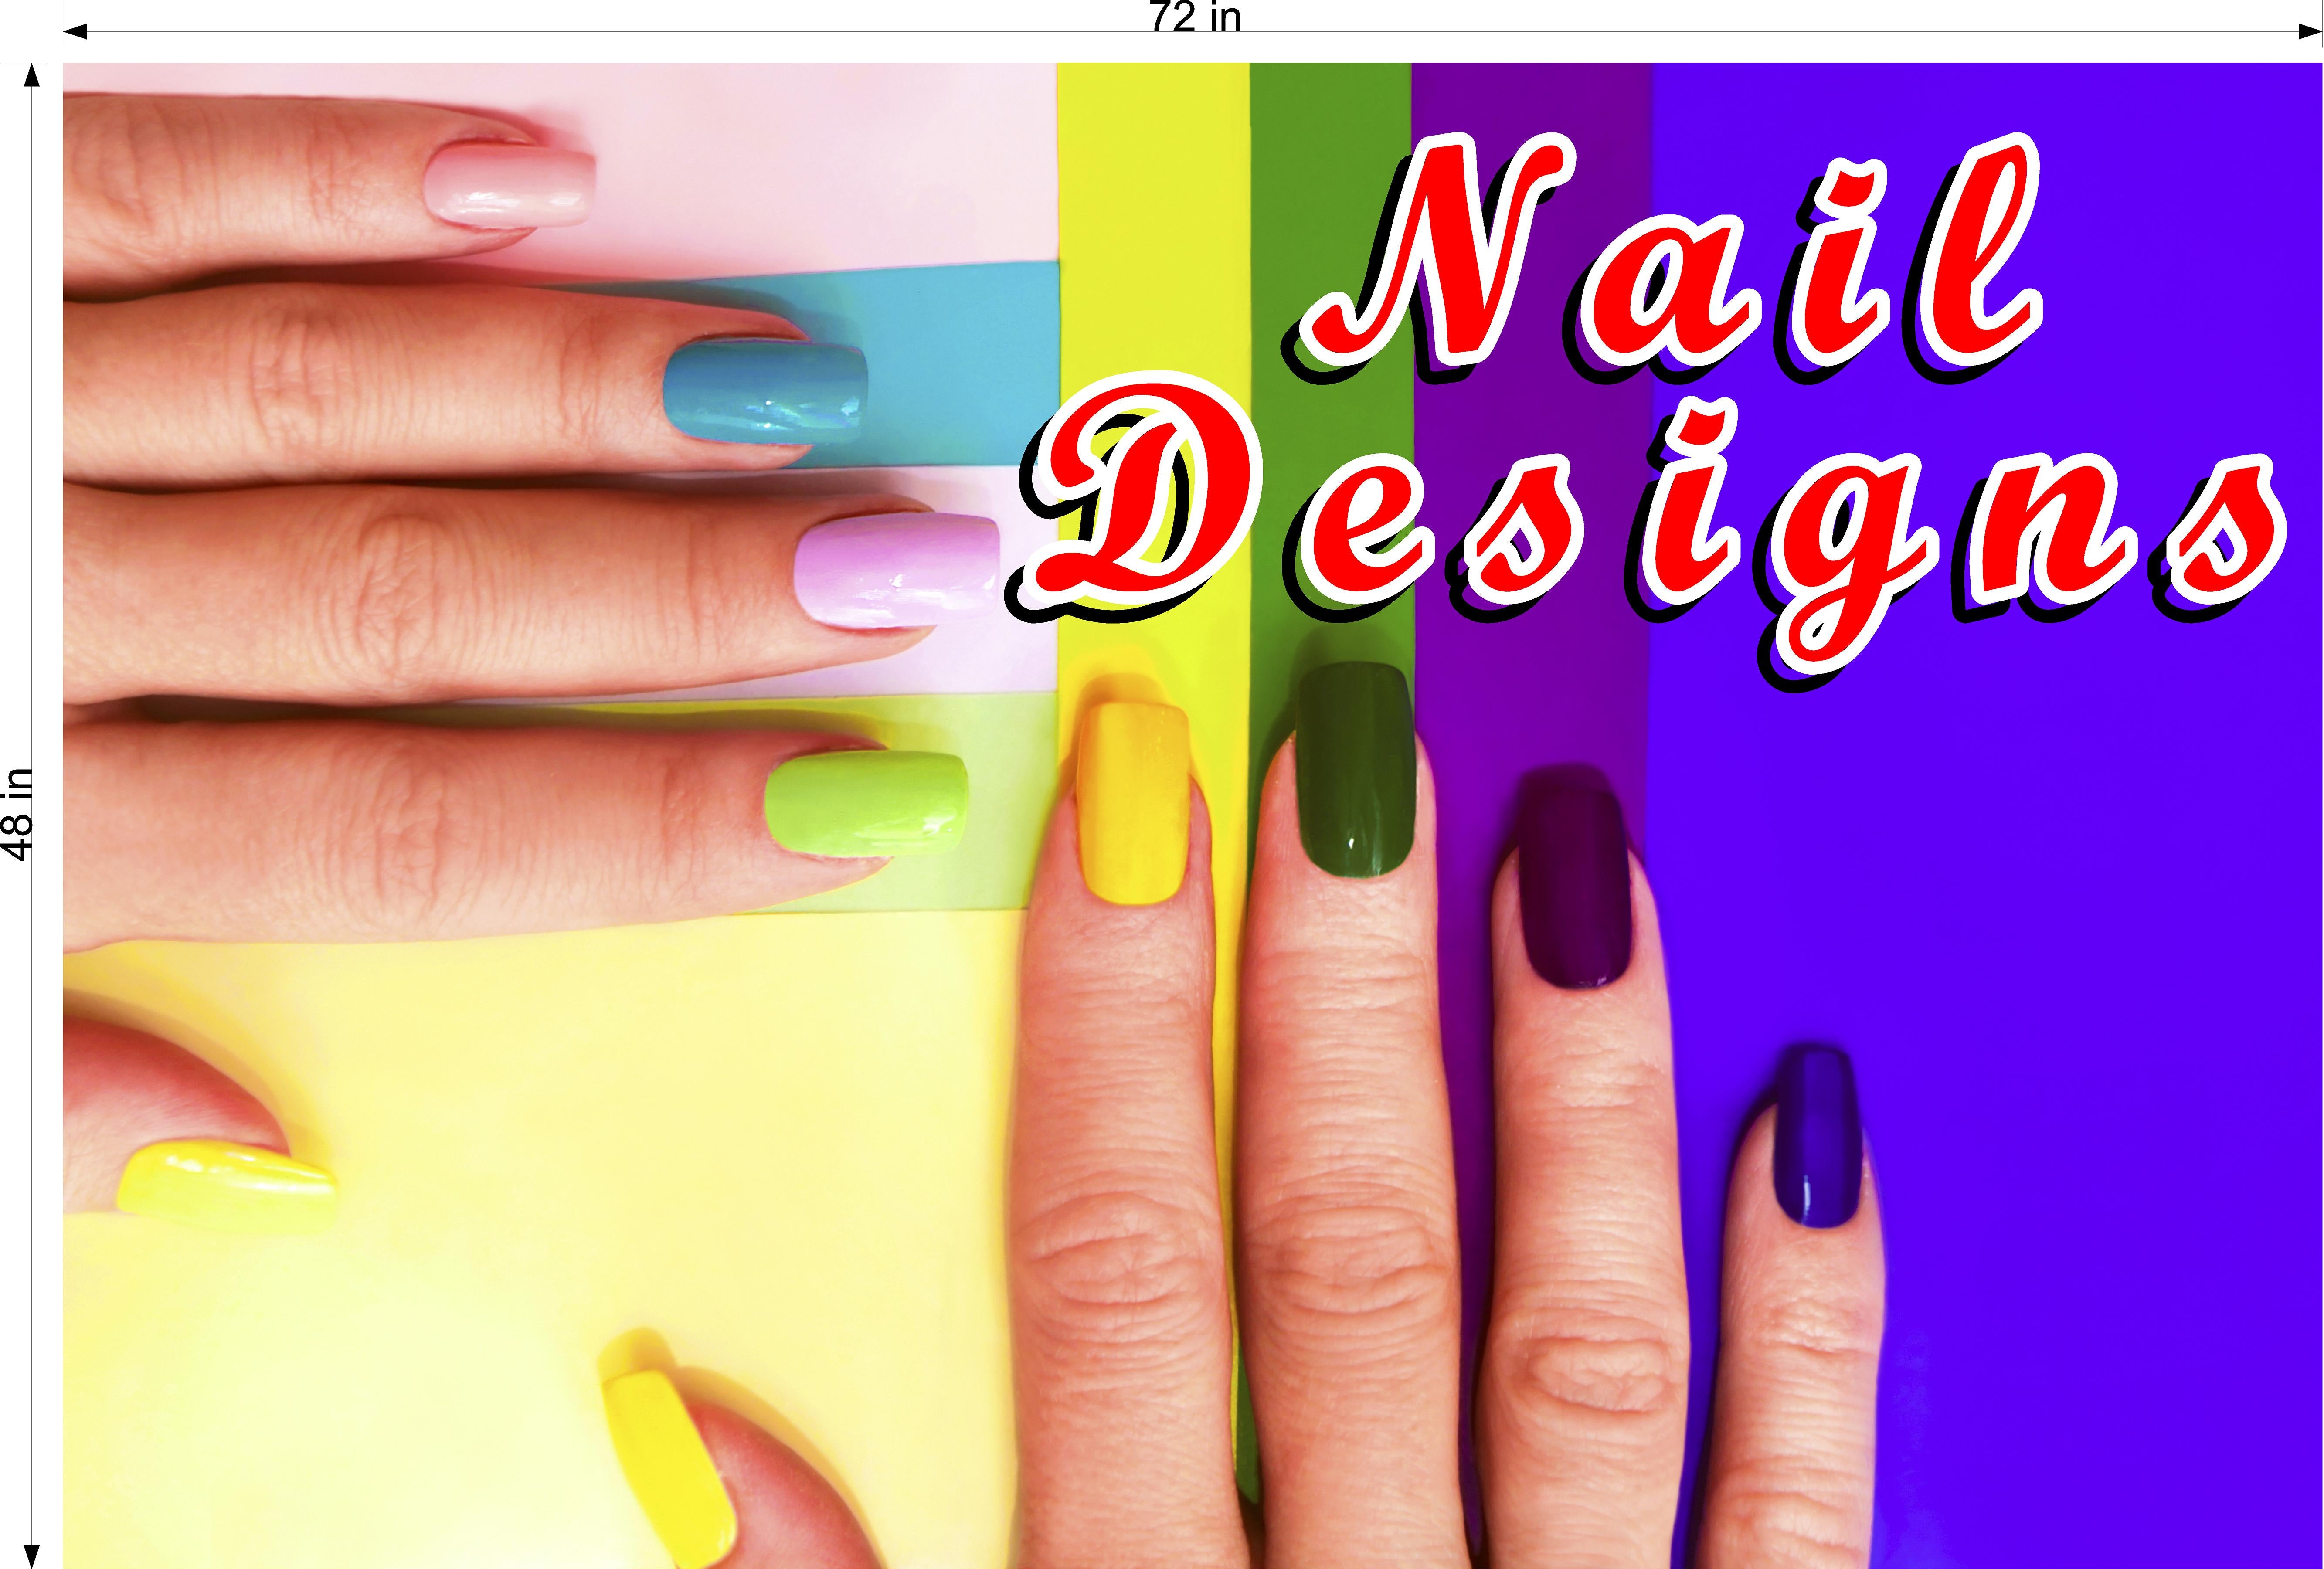 Nail Designs 06 Photo-Realistic Paper Poster Premium Interior Inside Sign Adverting Marketing Wall Window Non-Laminated Horizontal